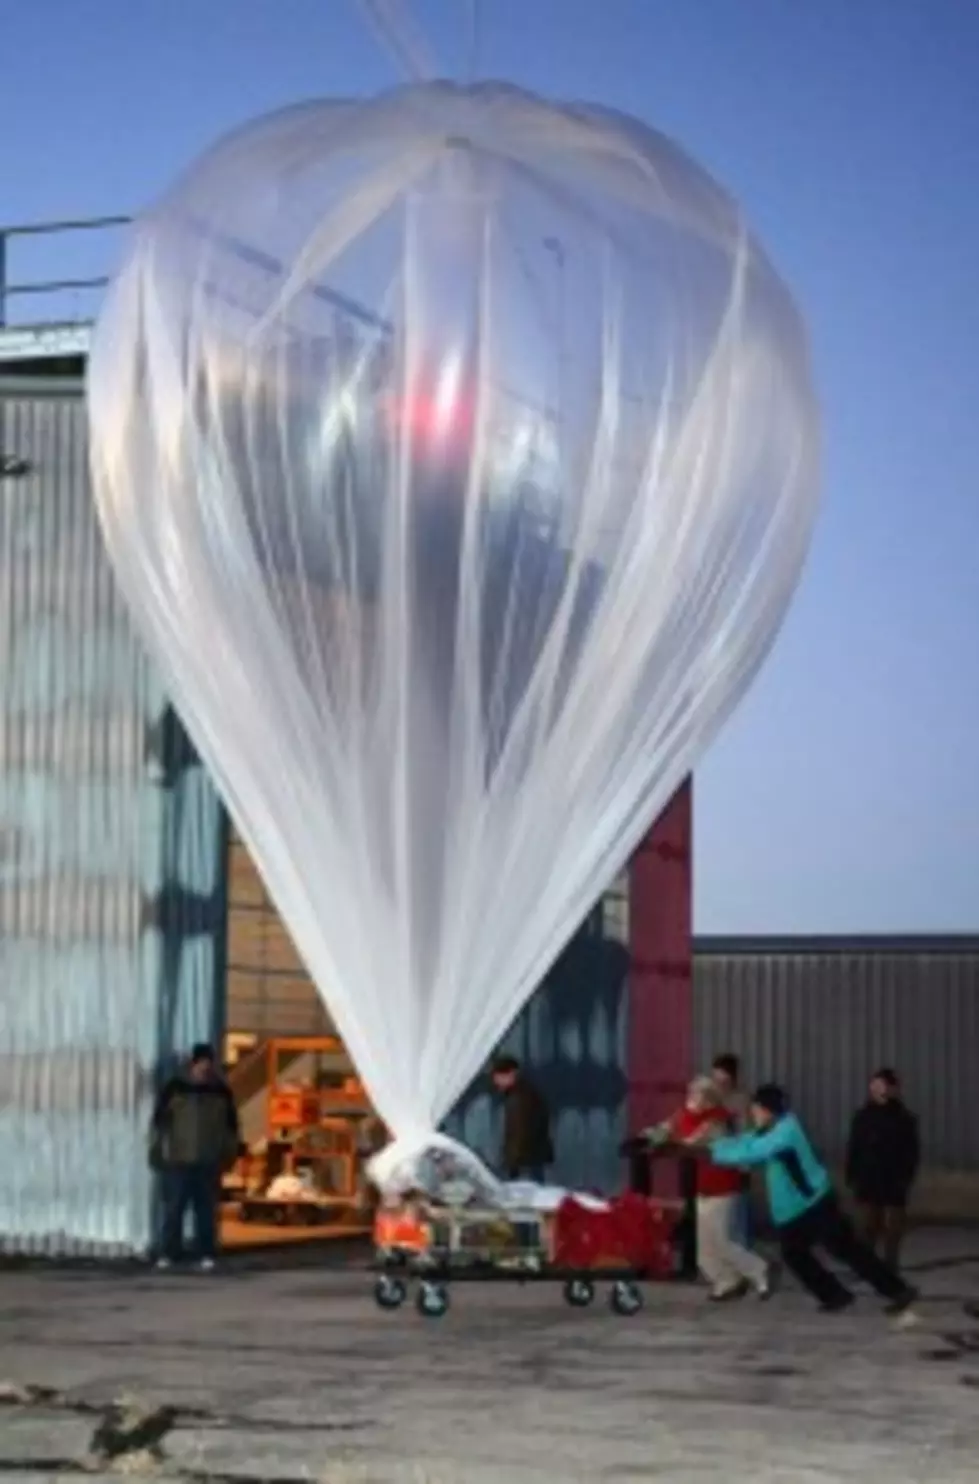 UW Balloon Research Program to Mark 50th Anniversary